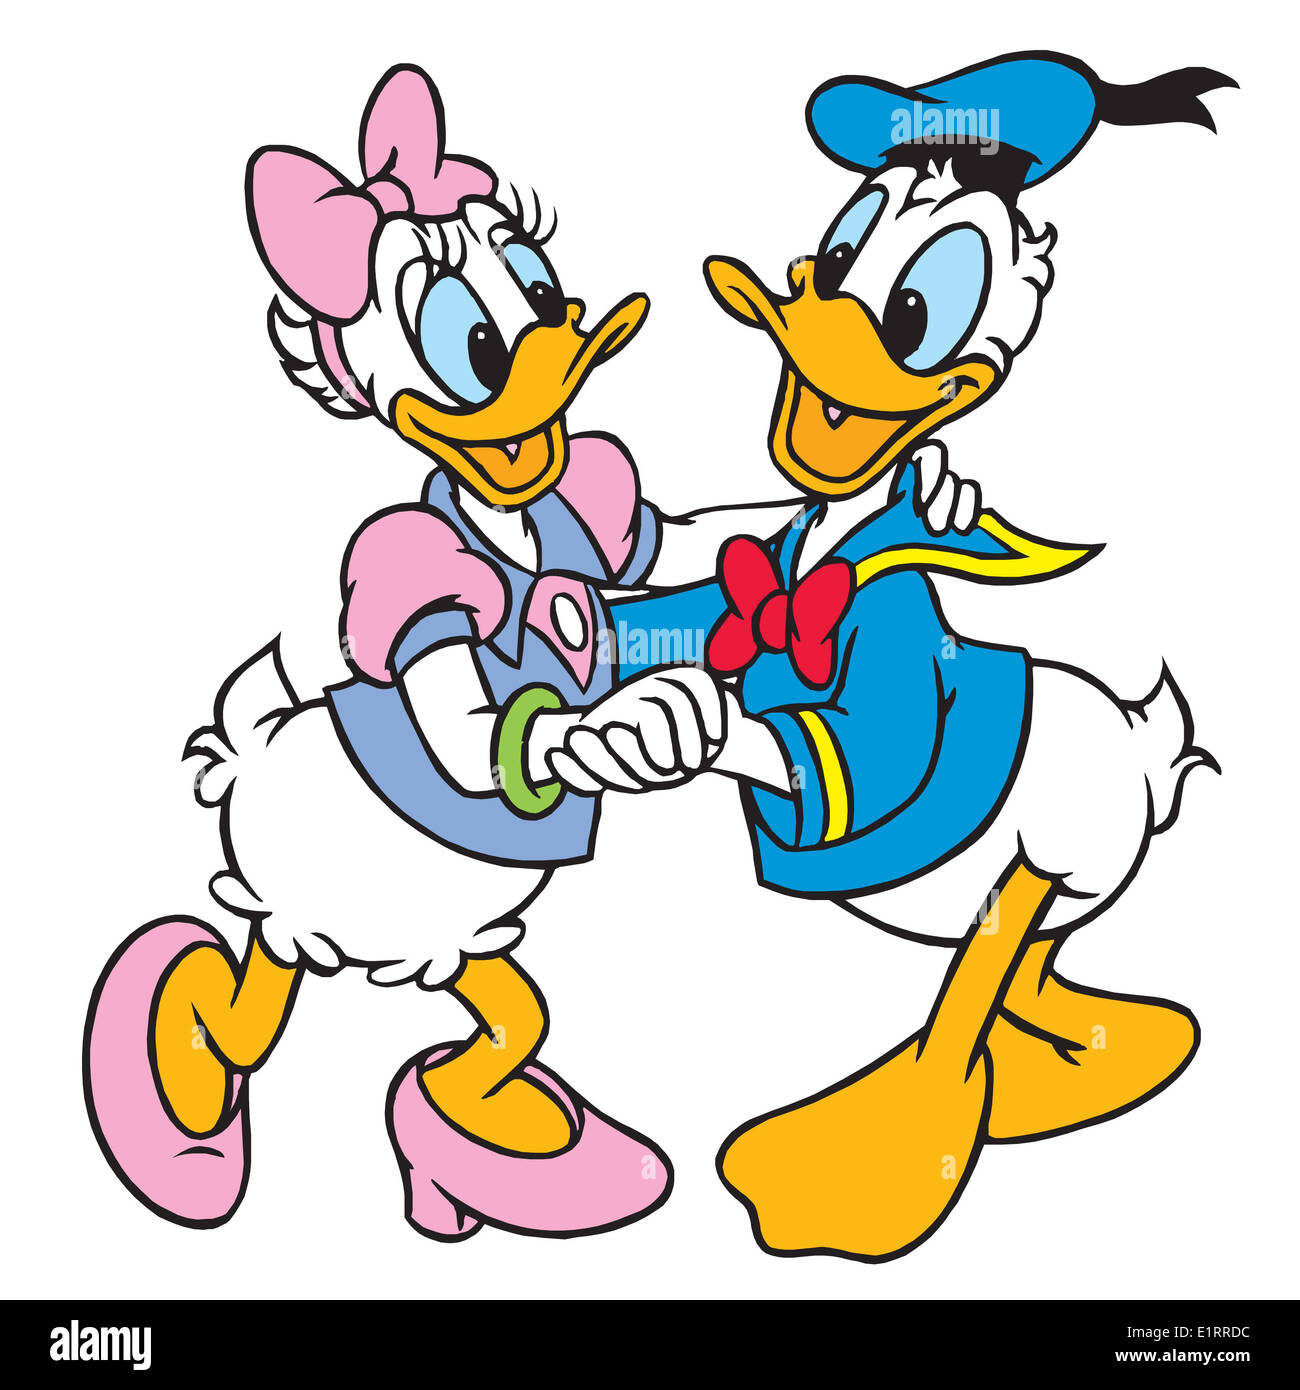 Donald Duck und Daisy Duck Stockfotografie - Alamy